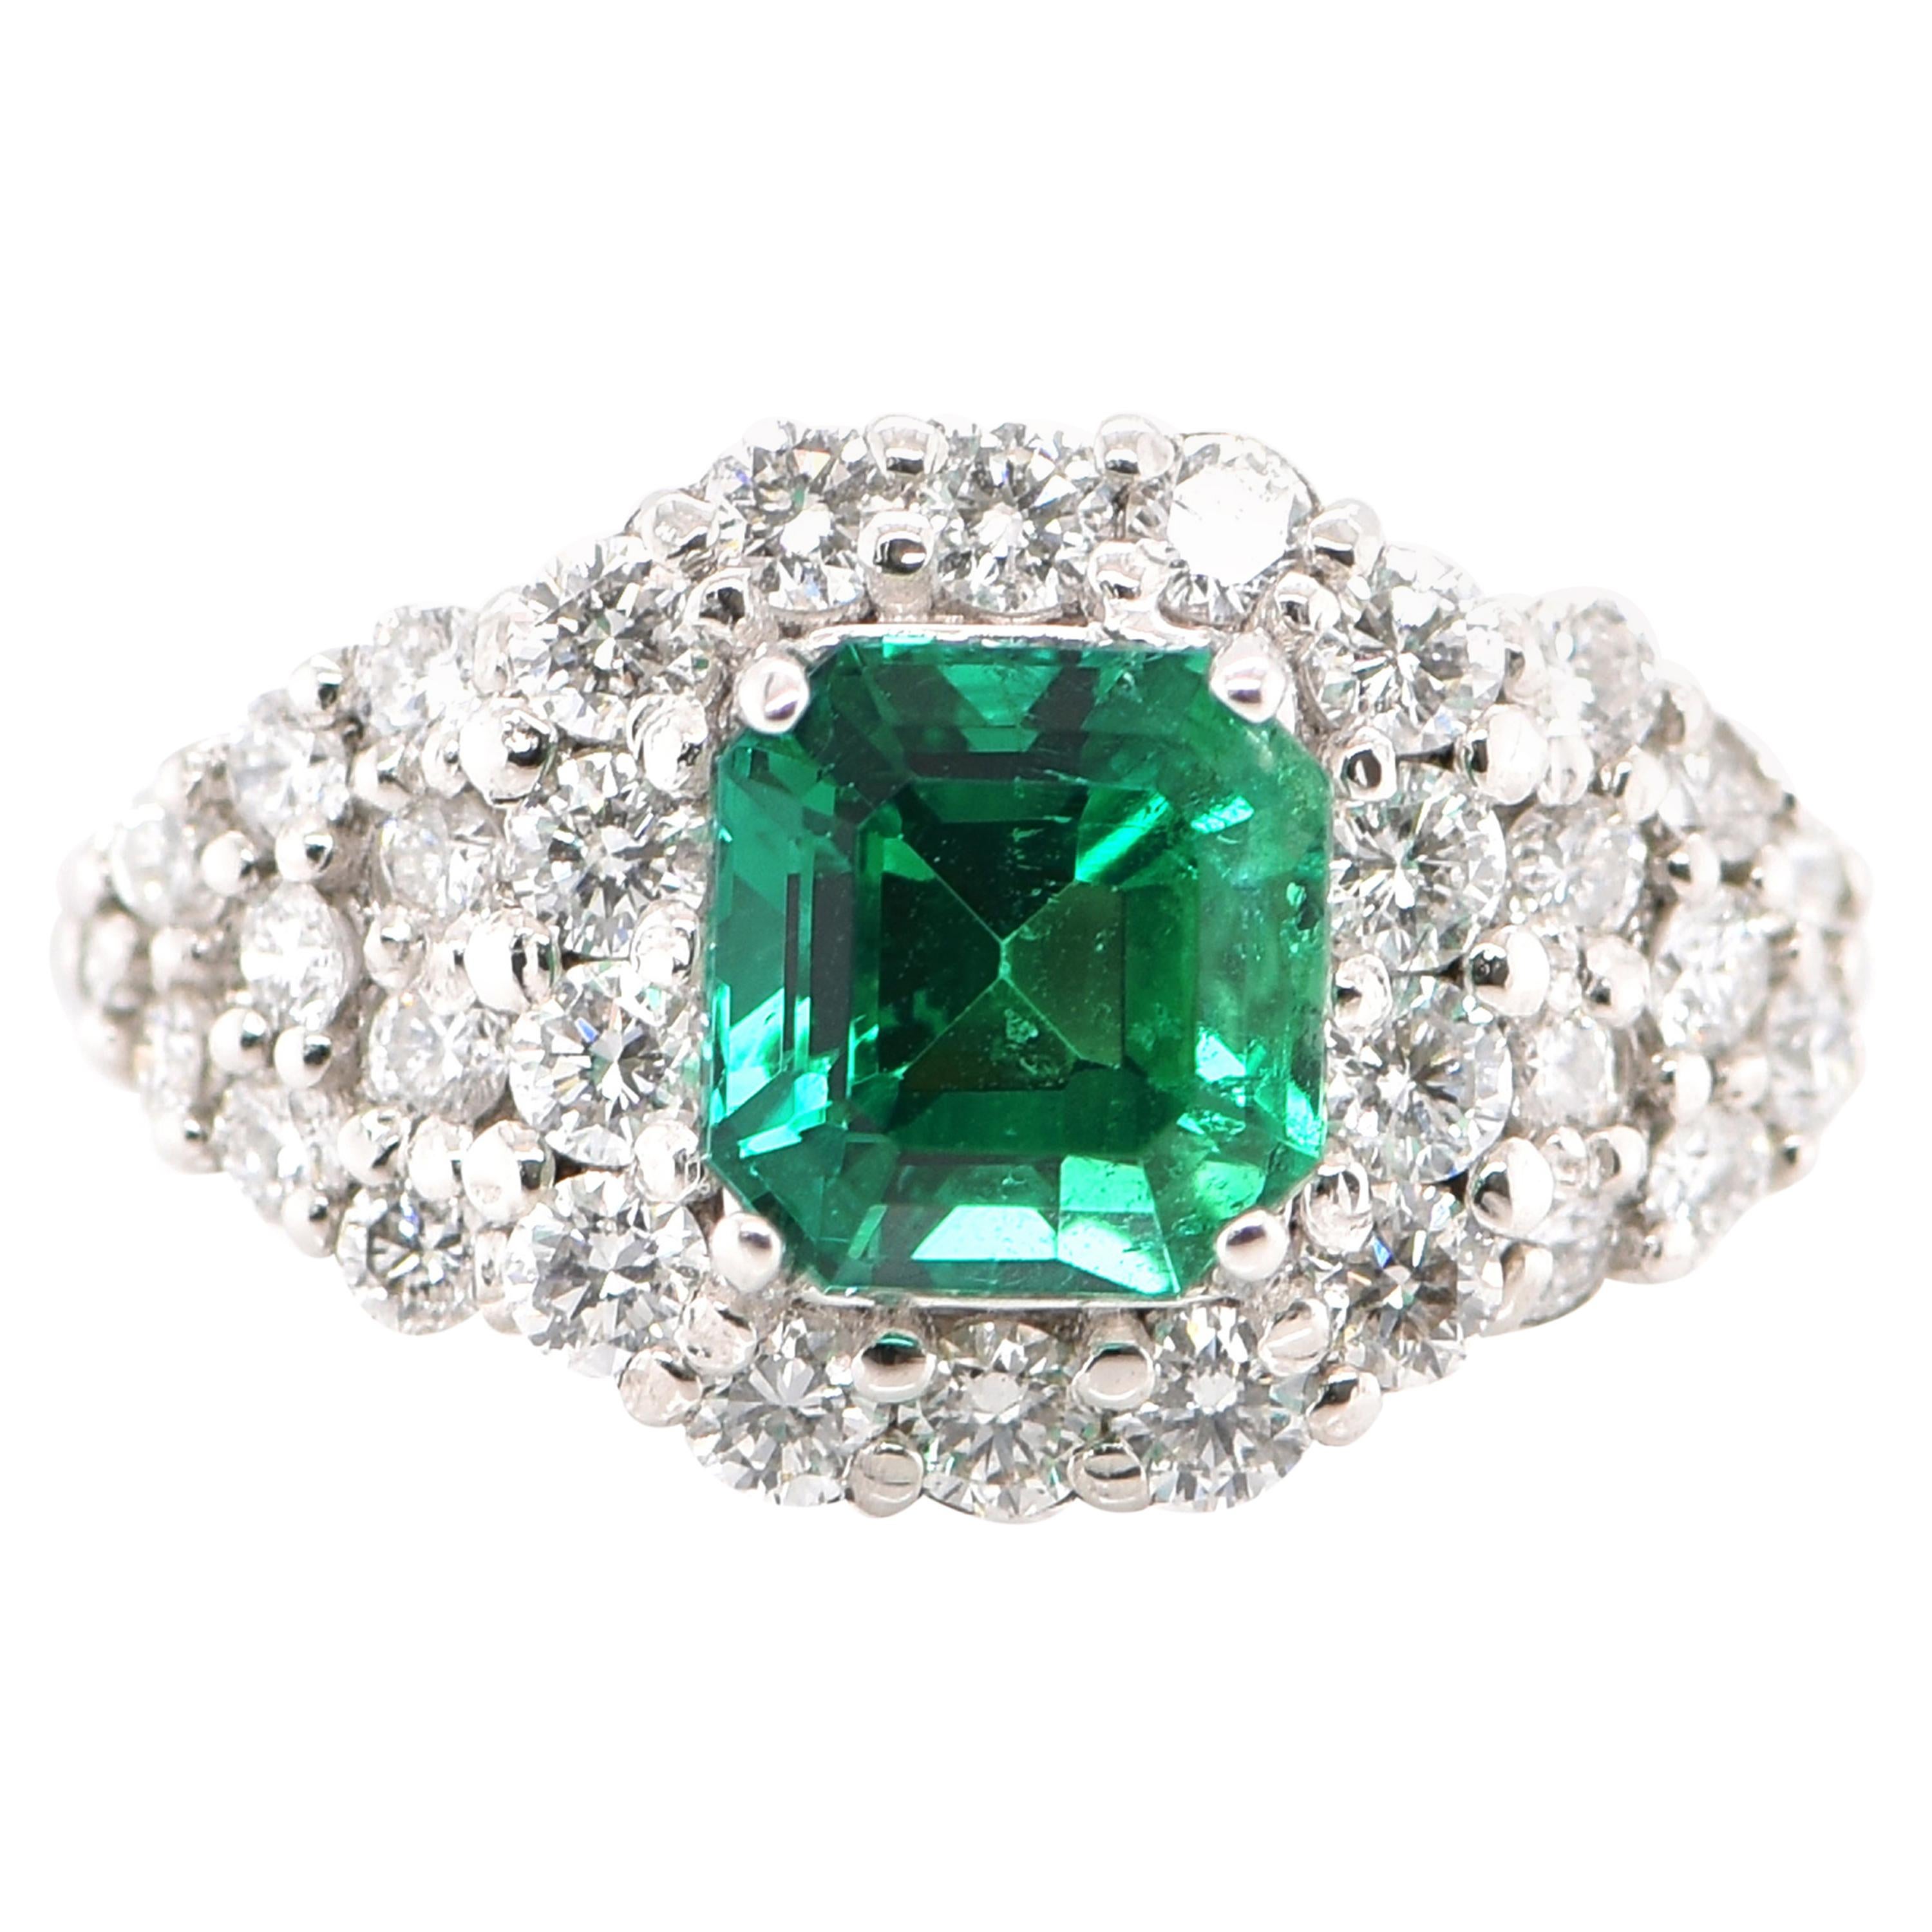 GIA Certified 1.39 Carat Natural Emerald and Diamond Ring Set in Platinum